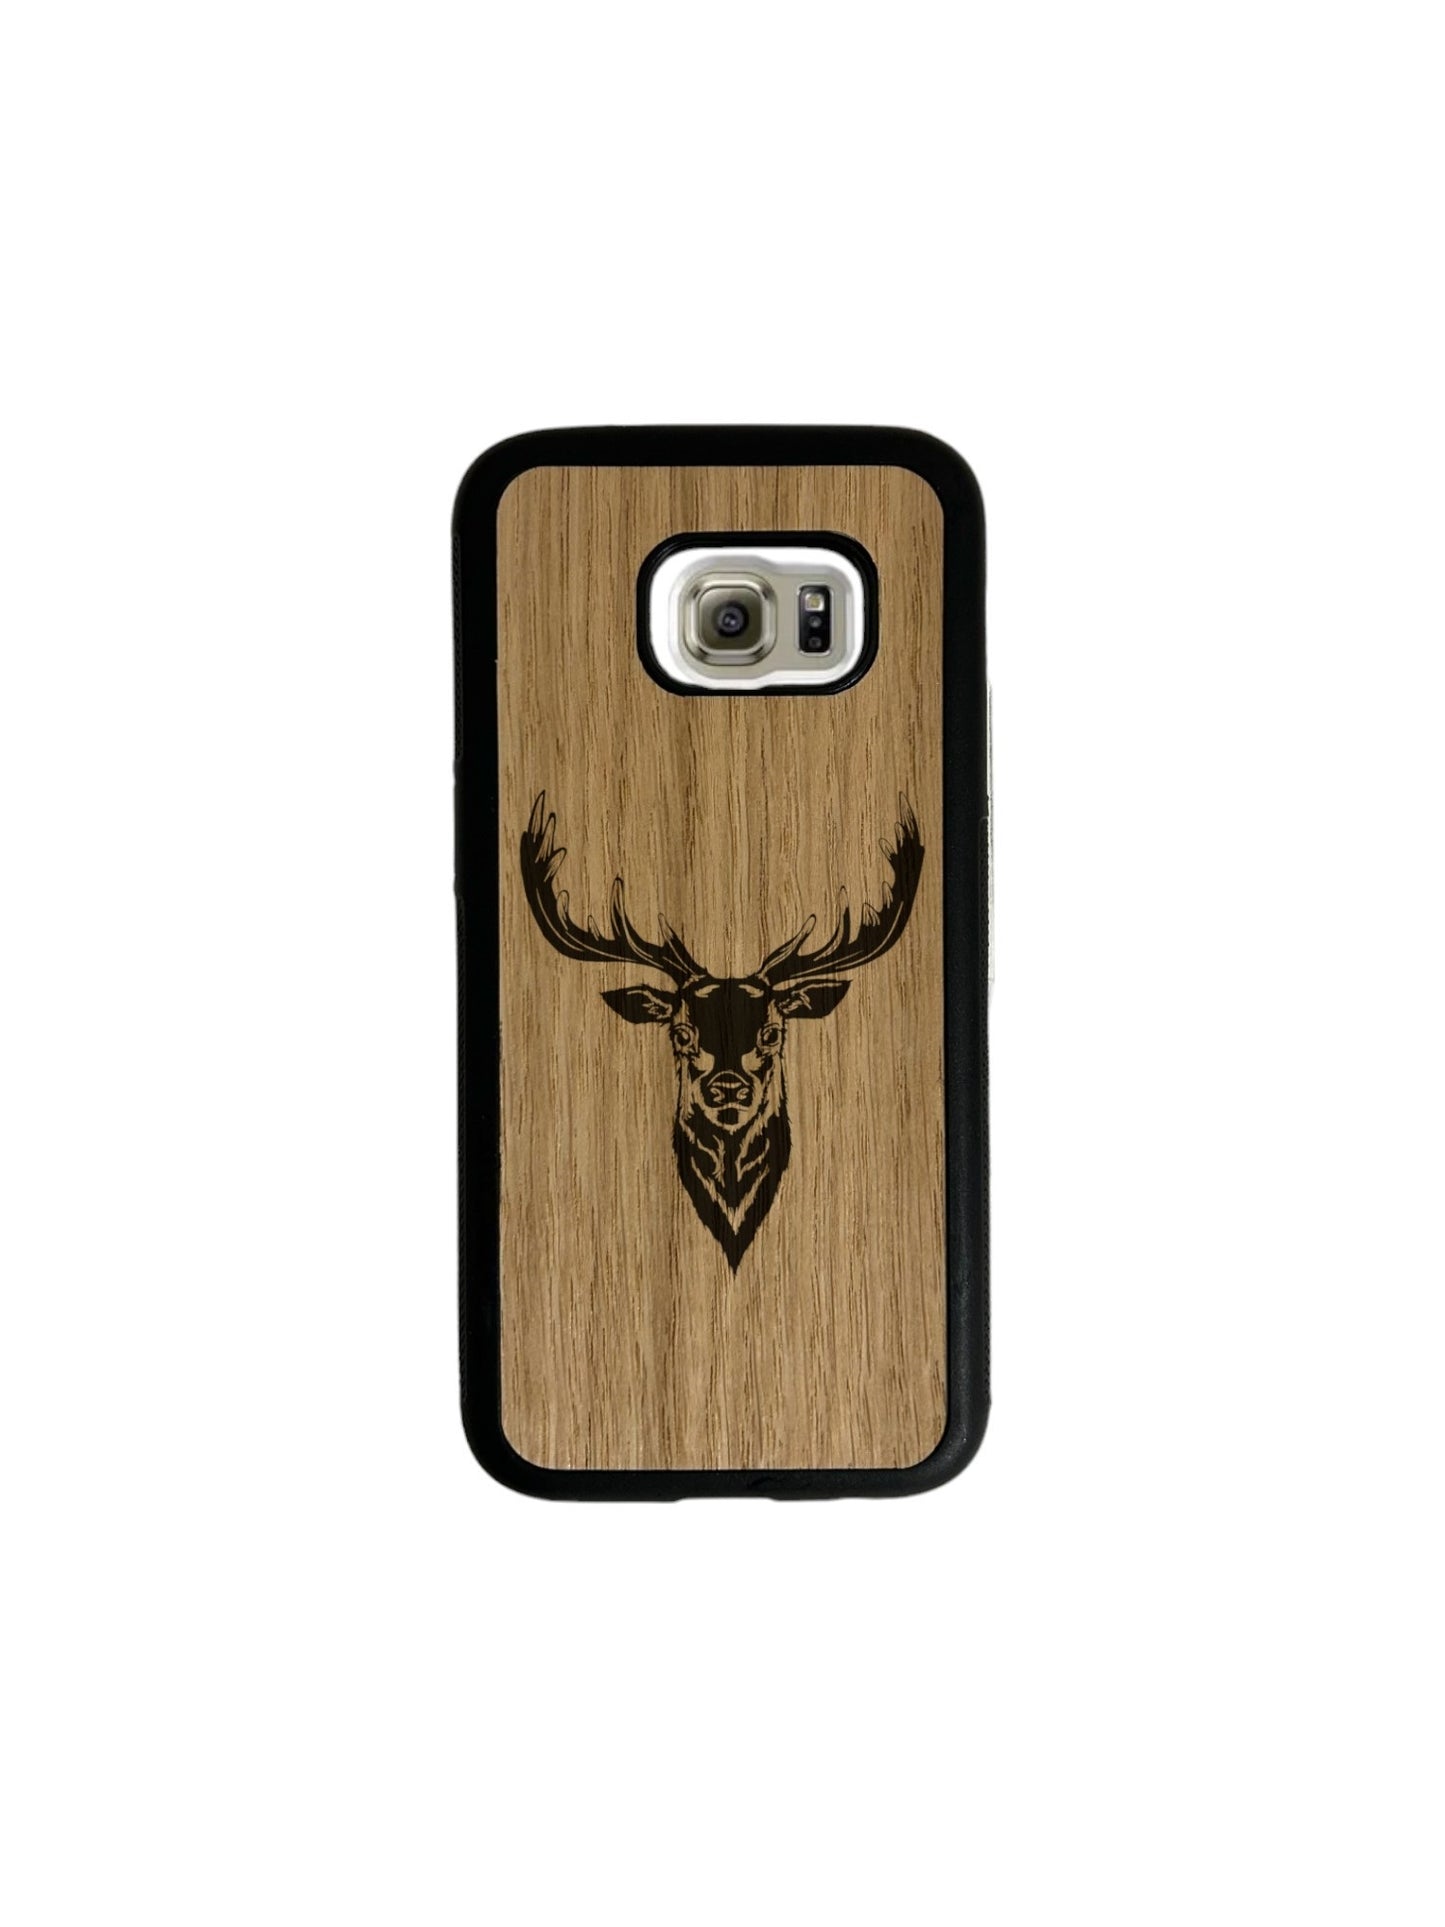 Samsung Galaxy S case - Deer engraving